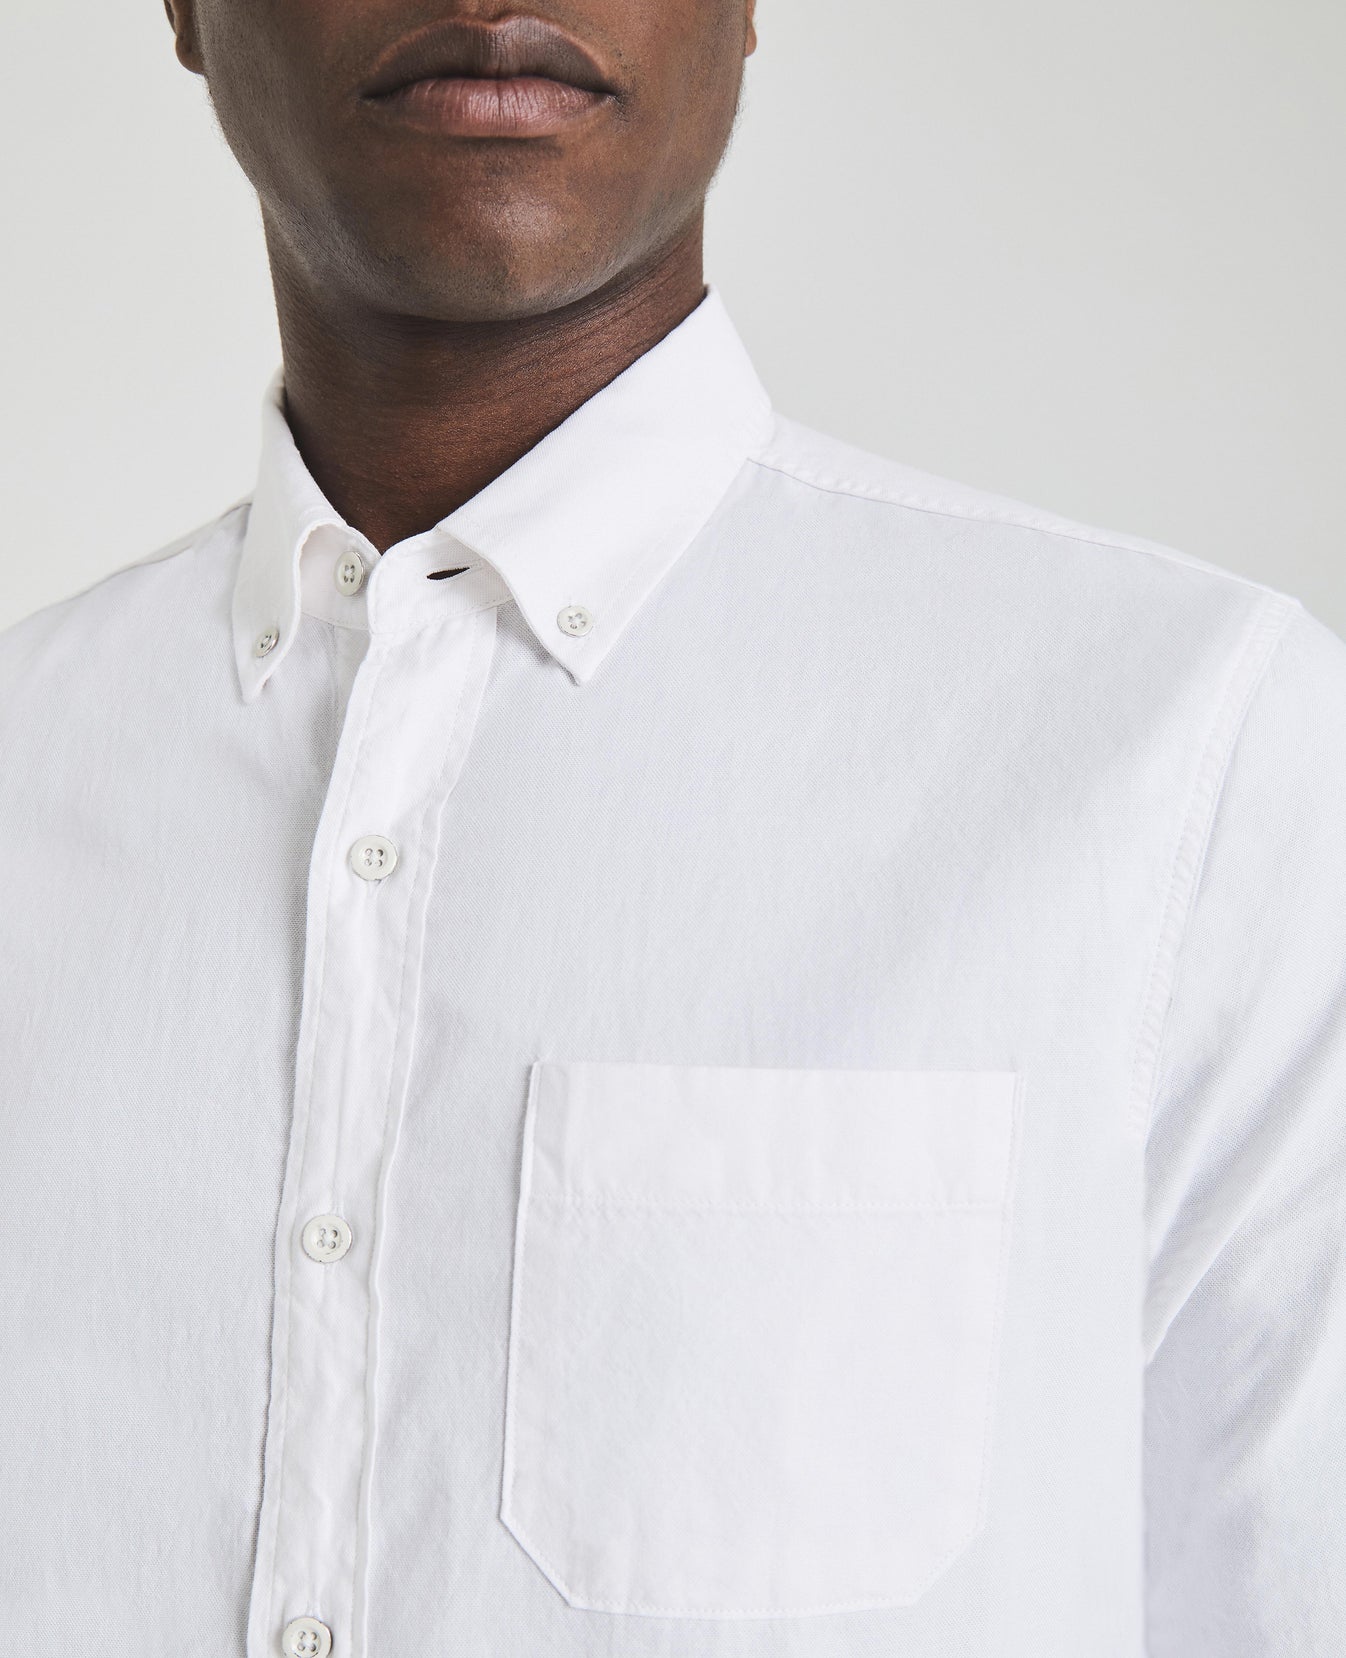 Ace Pocket Shirt Ivory Dust Long Sleeve Shirt Men Tops Photo 2